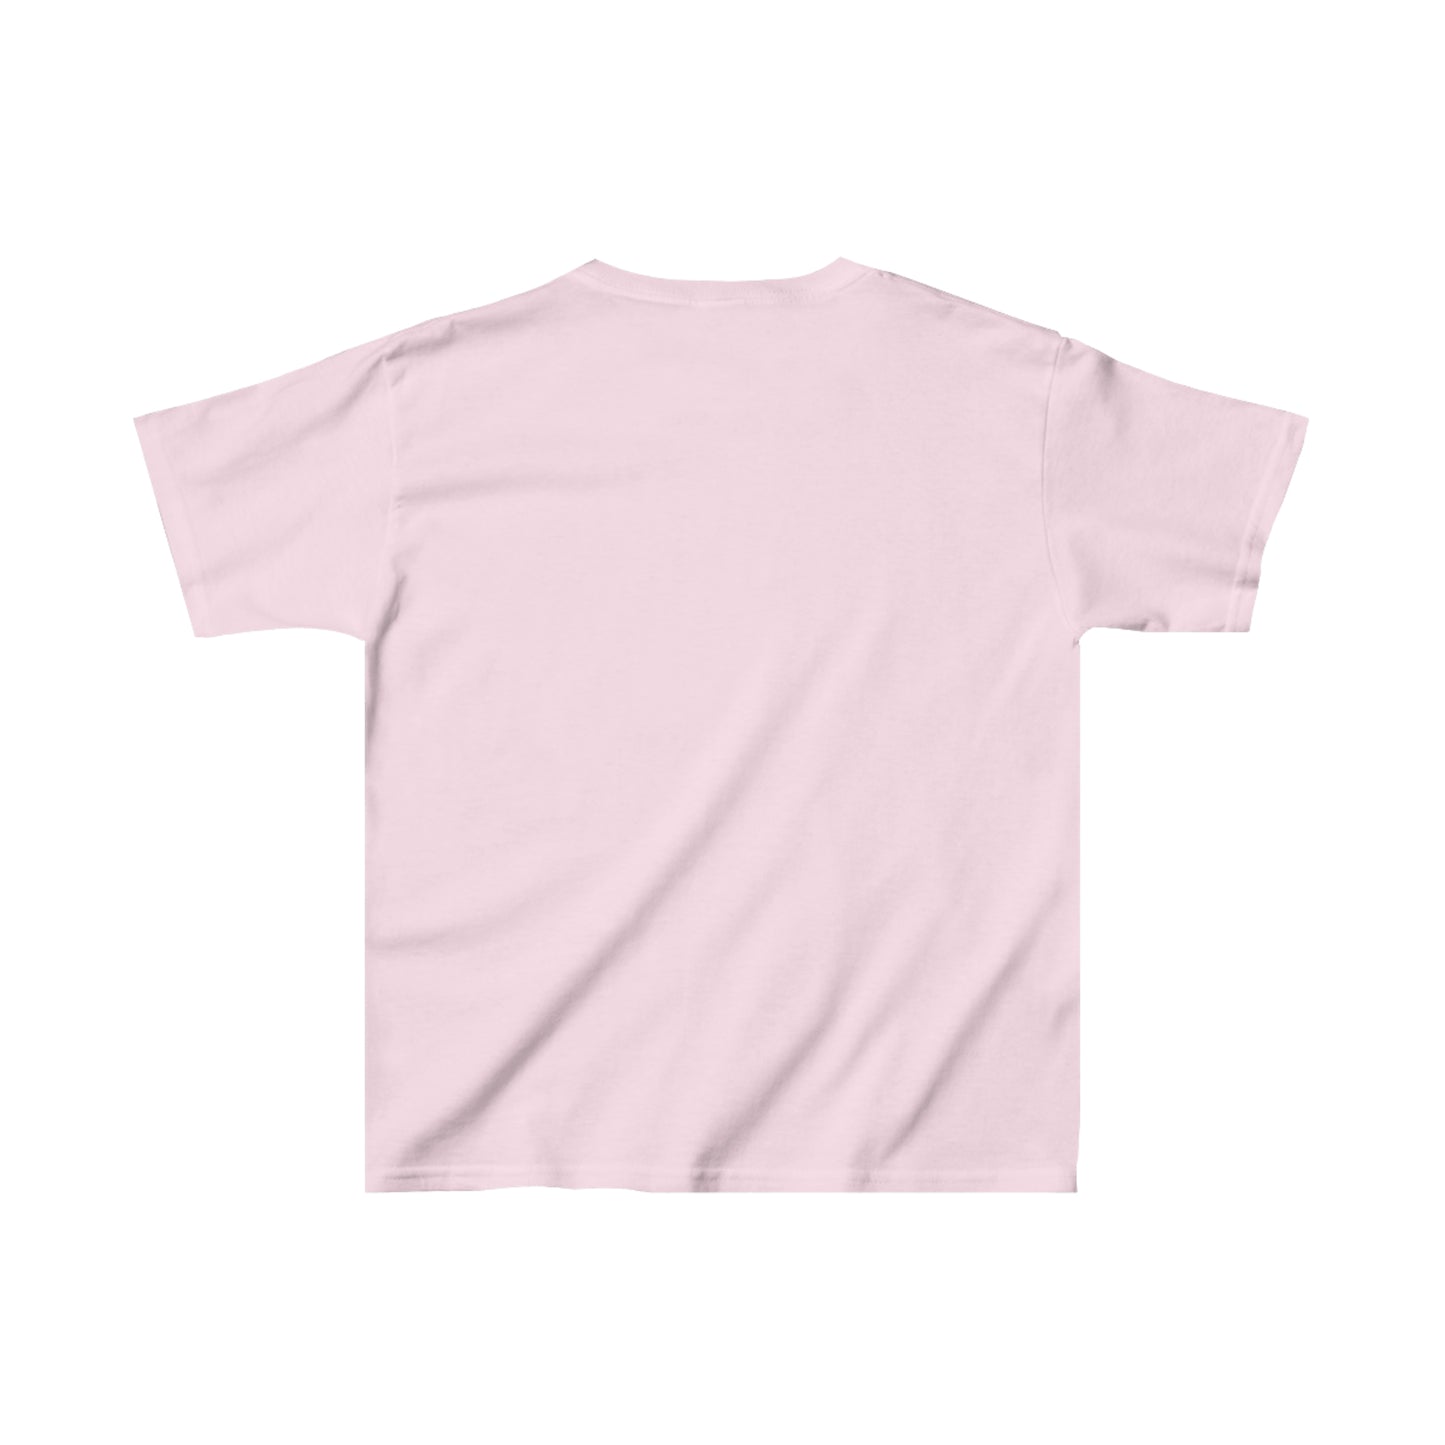 12 pack Custom Hero Tee Shirt for Hospitals! Girls Medium $239.90